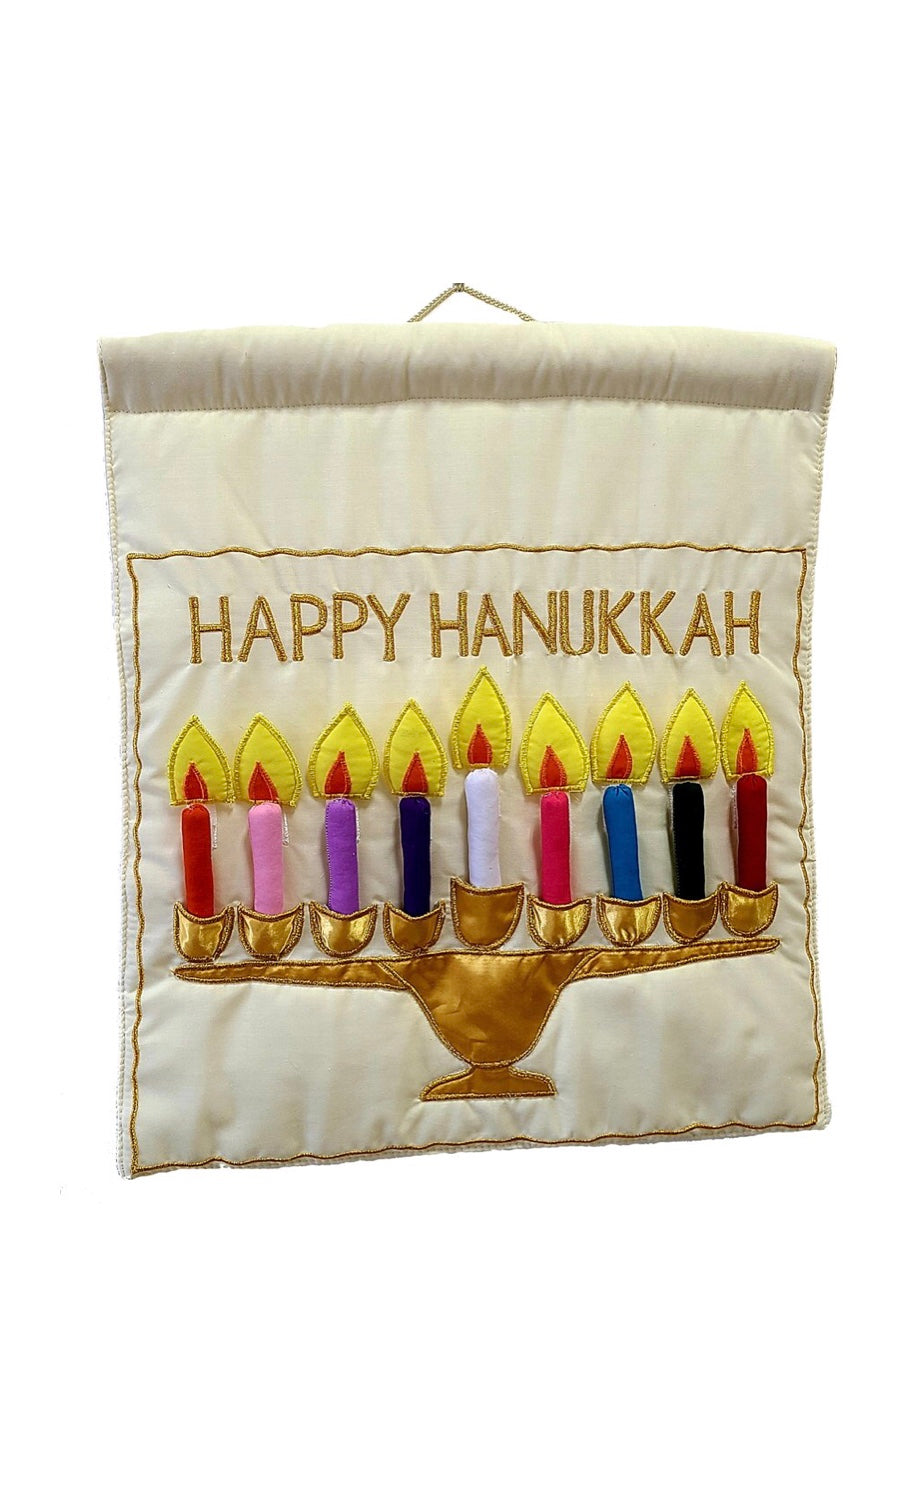 Hanukkah Menorah Wall Hanging toys in White and Pink